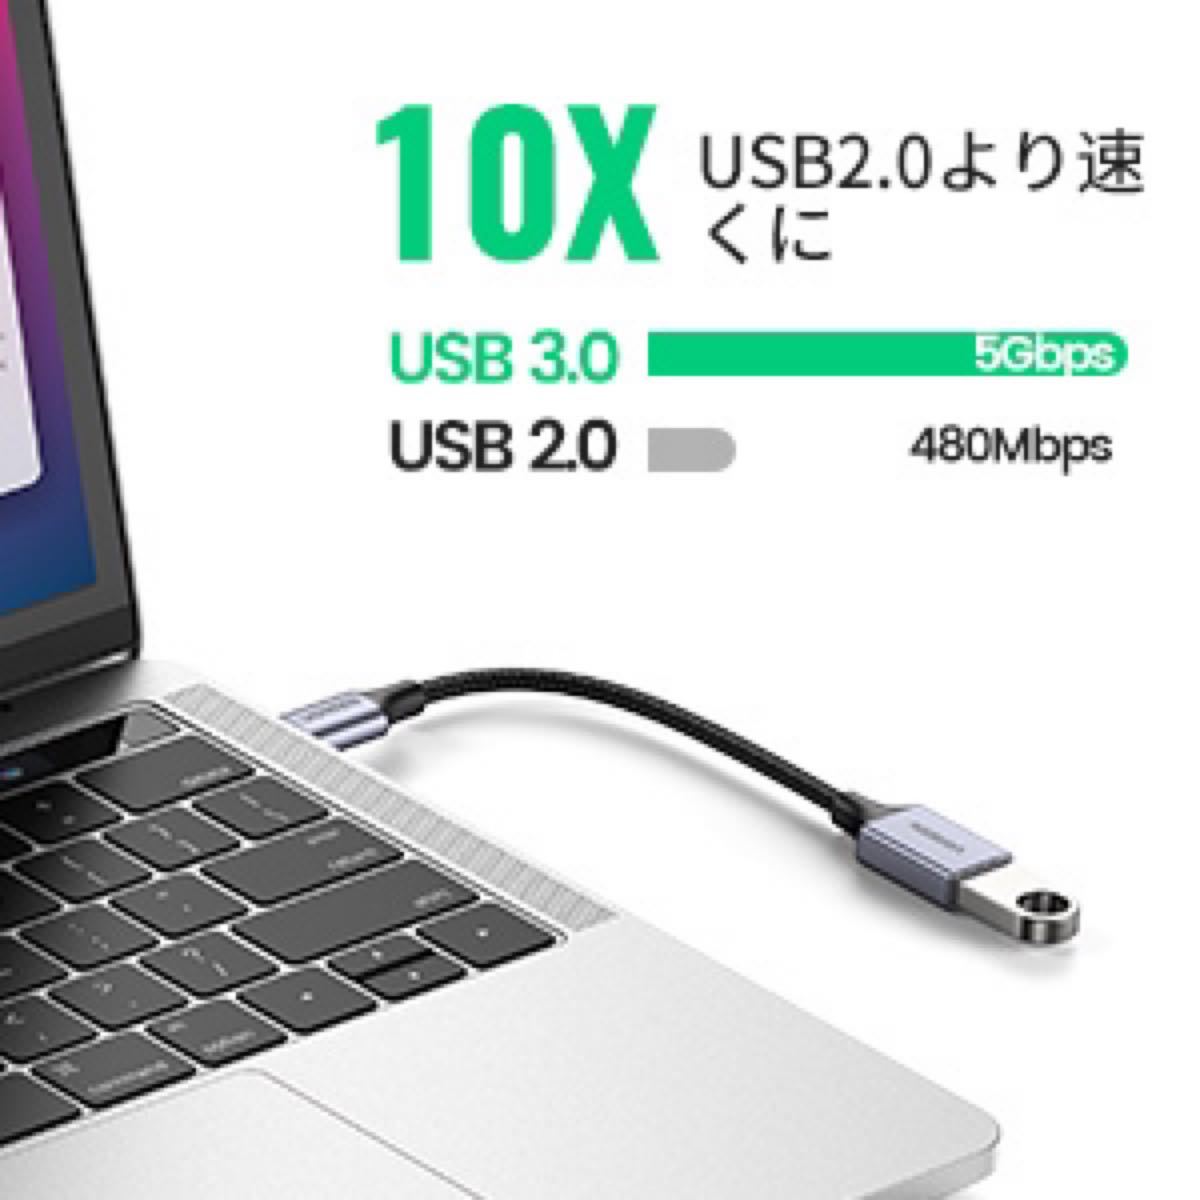 USB TypeC to USB3.0 OTG 変換ケーブル No.8 ブルー Type-C